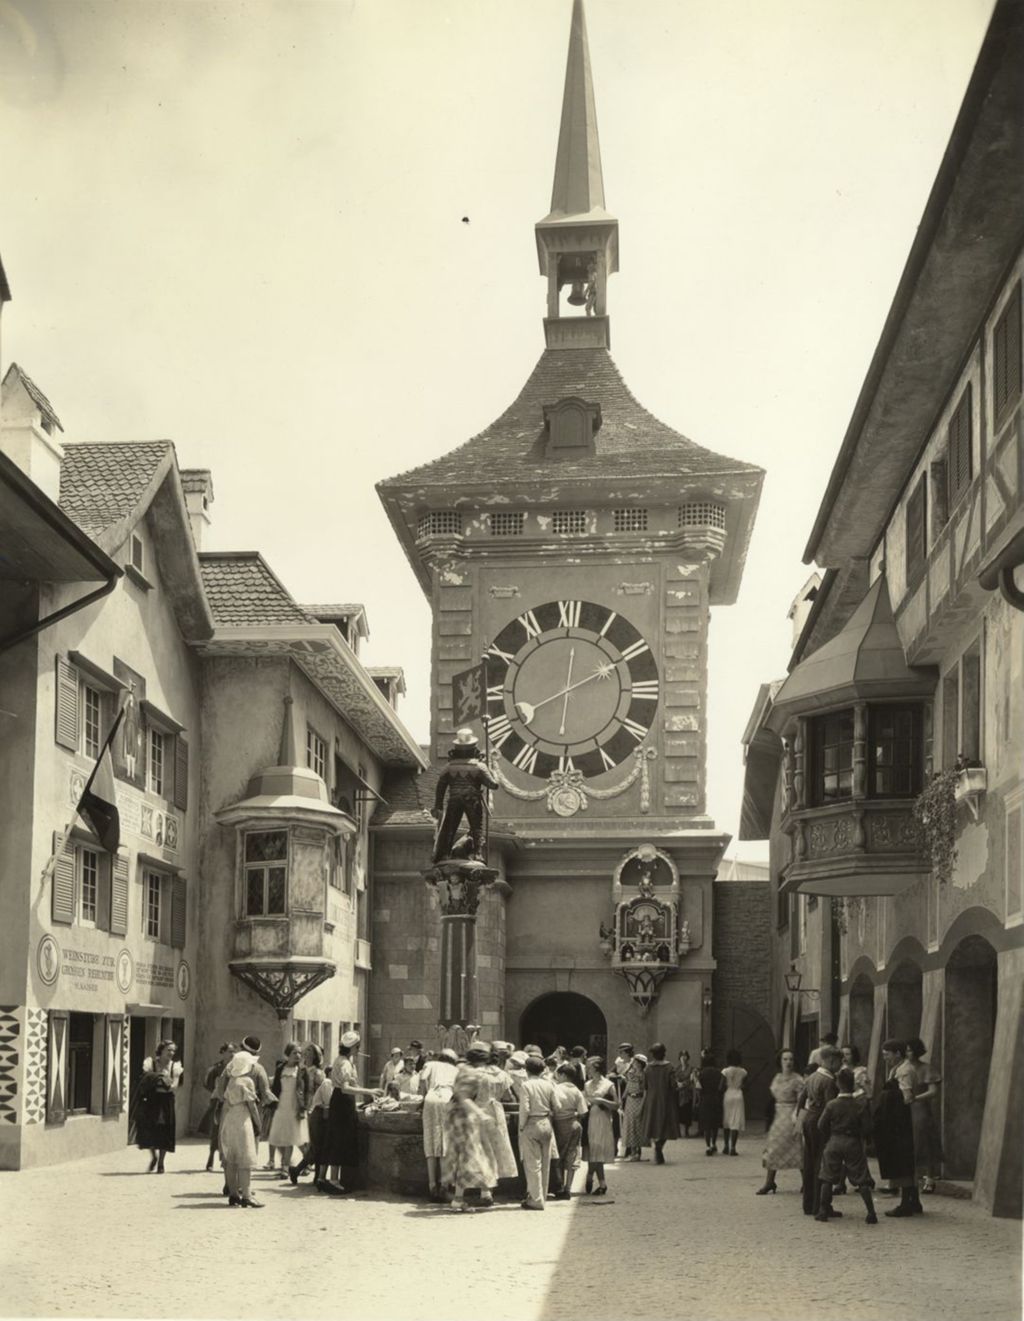 Miniature of Clock tower faces the public square